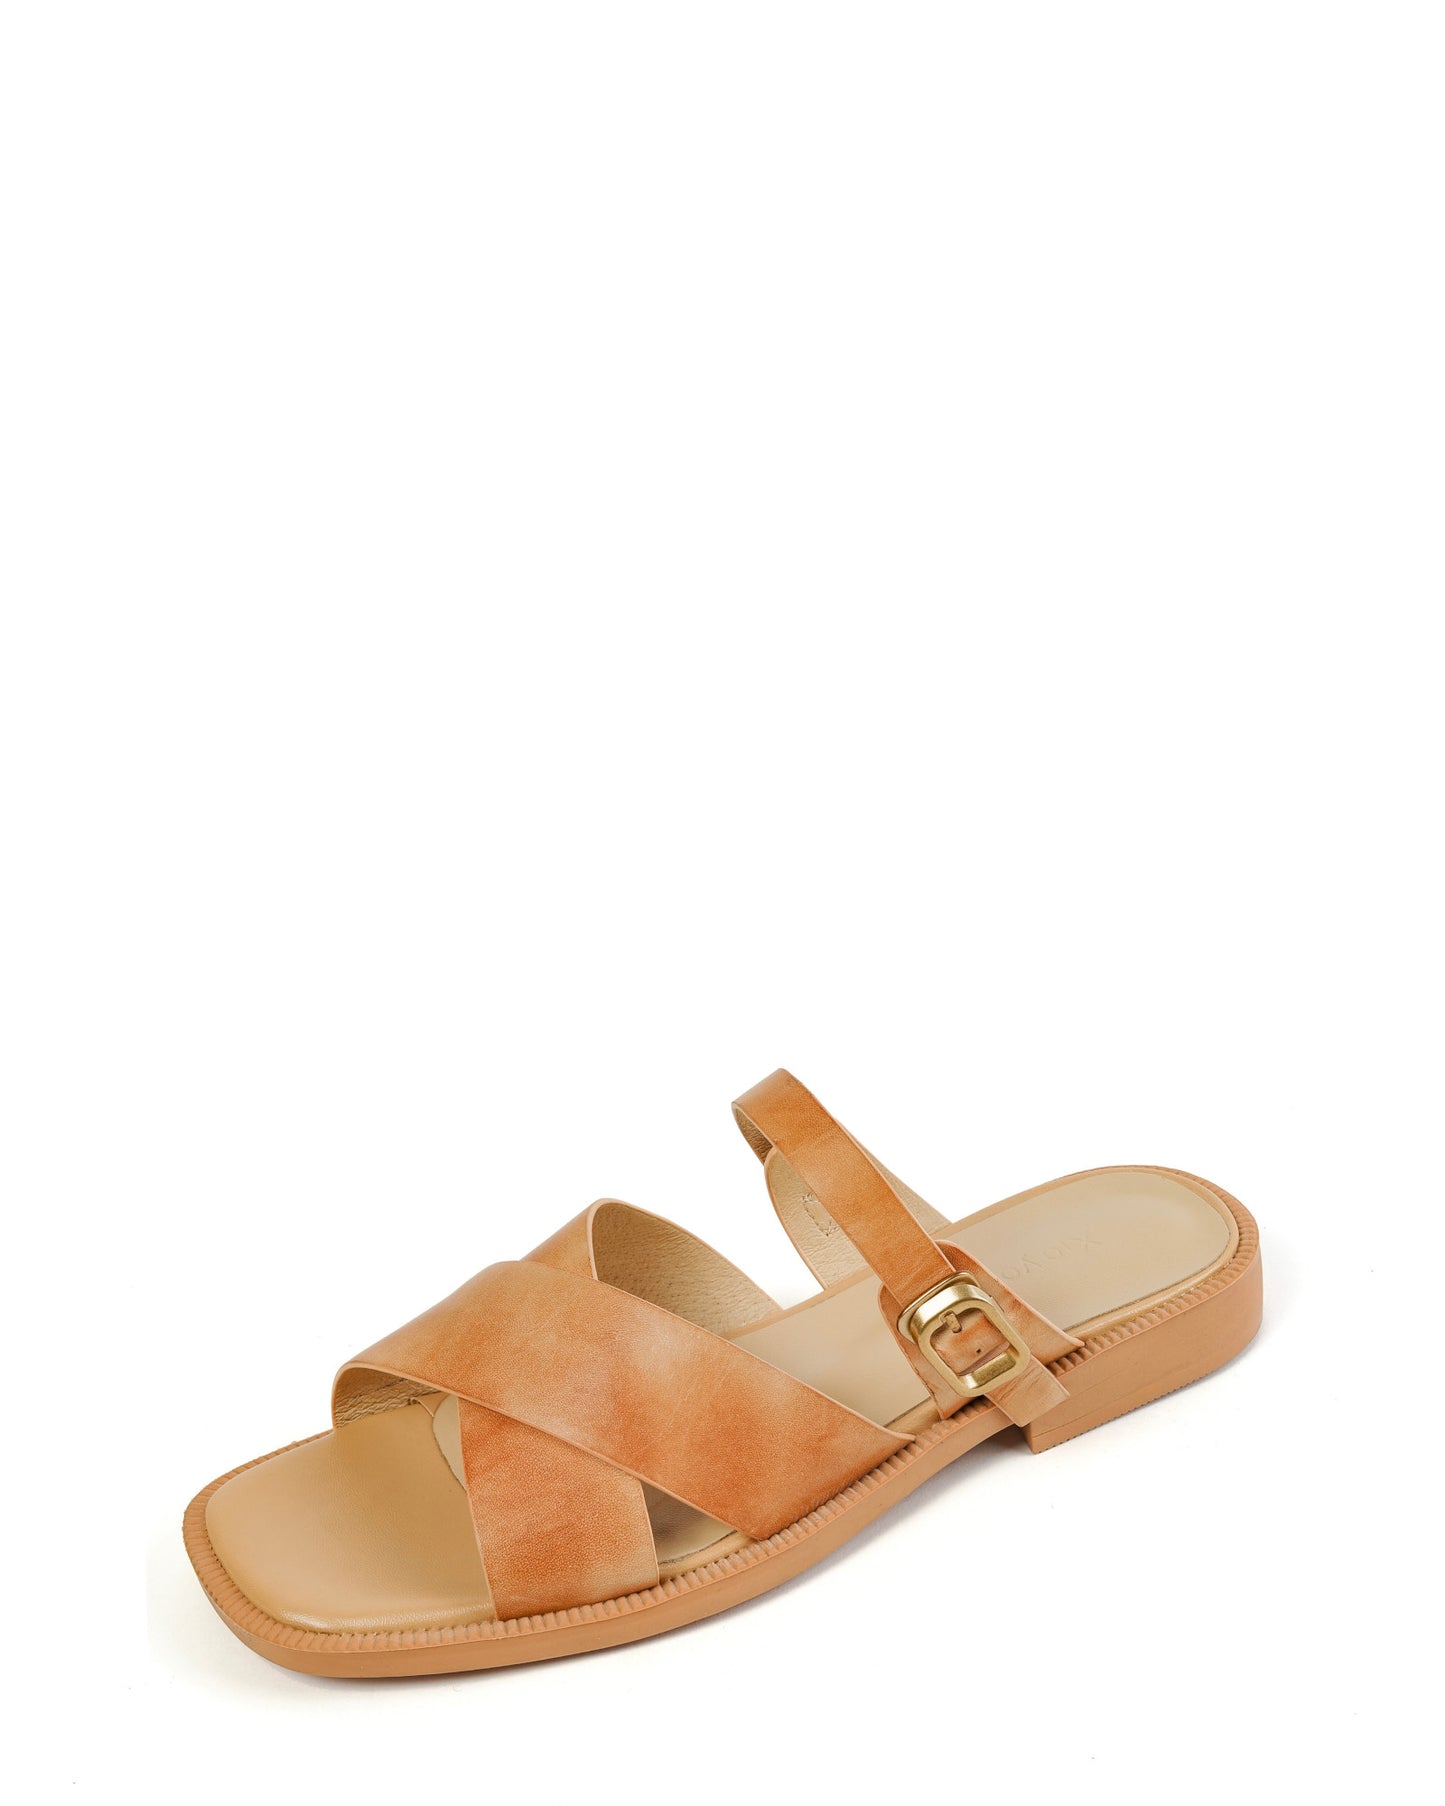 Lido-tan-leather-strap-sandals